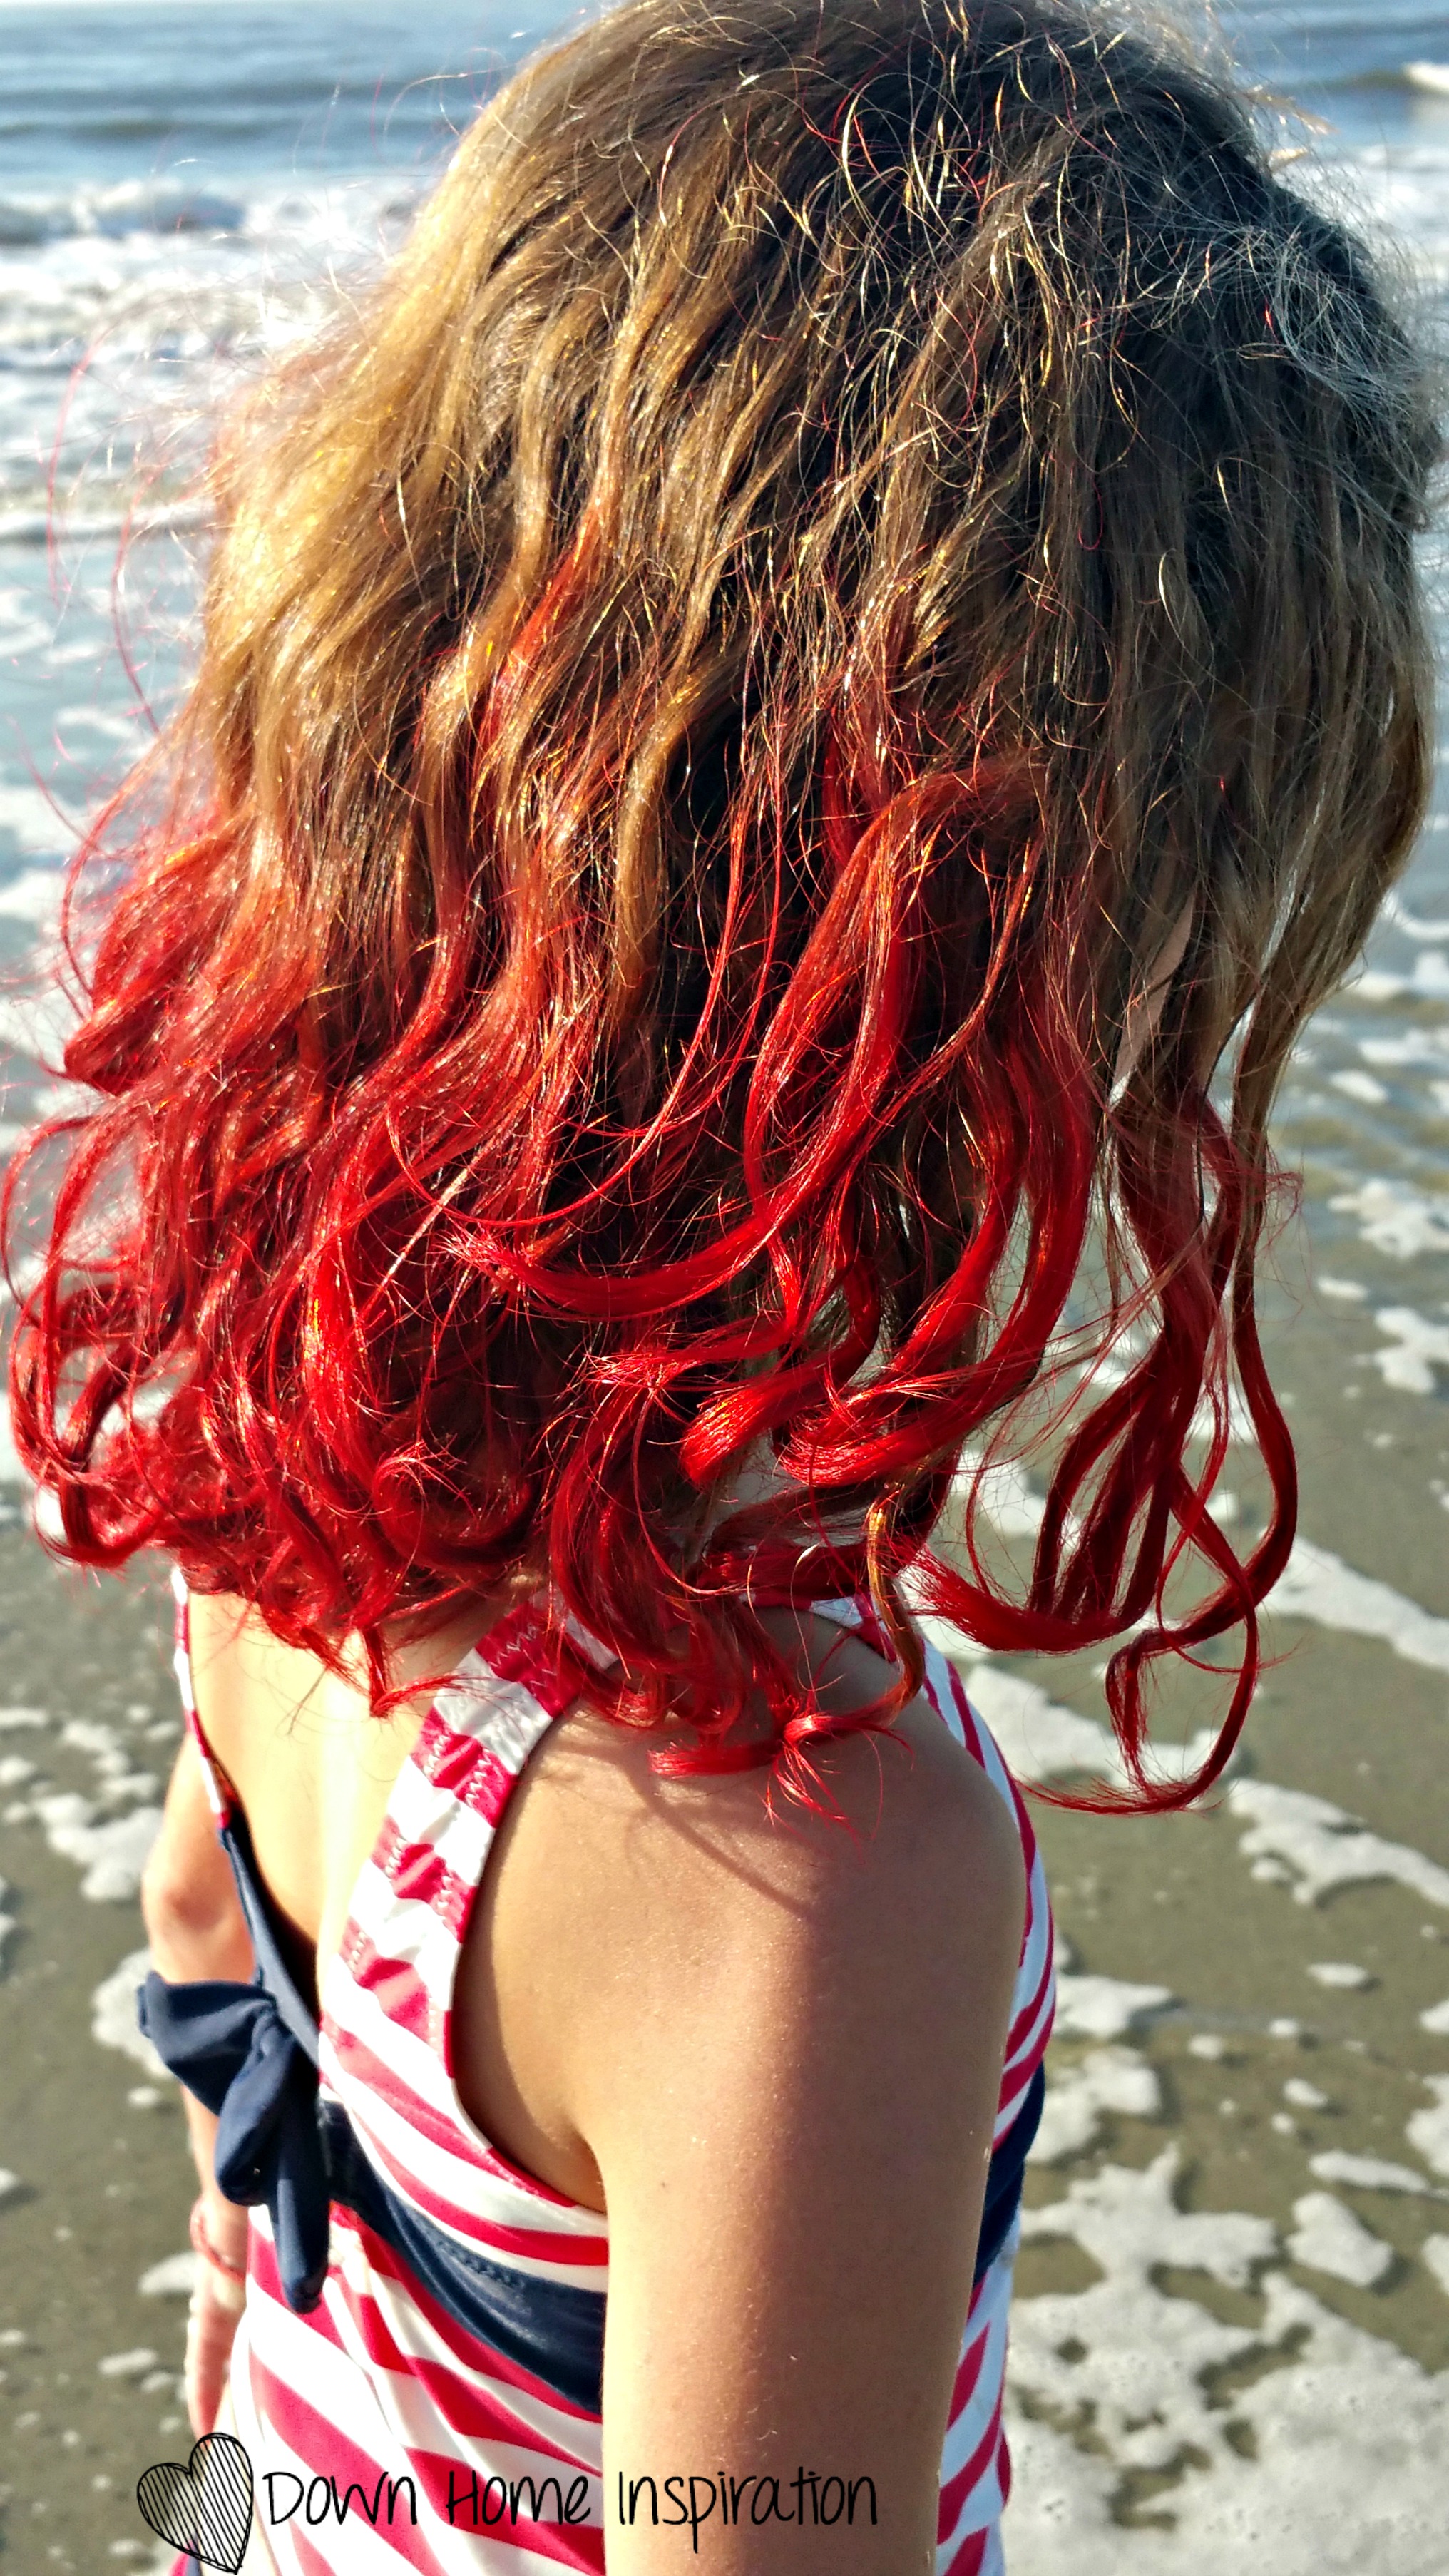 kool-aid-hair-color-8 - Down Home Inspiration